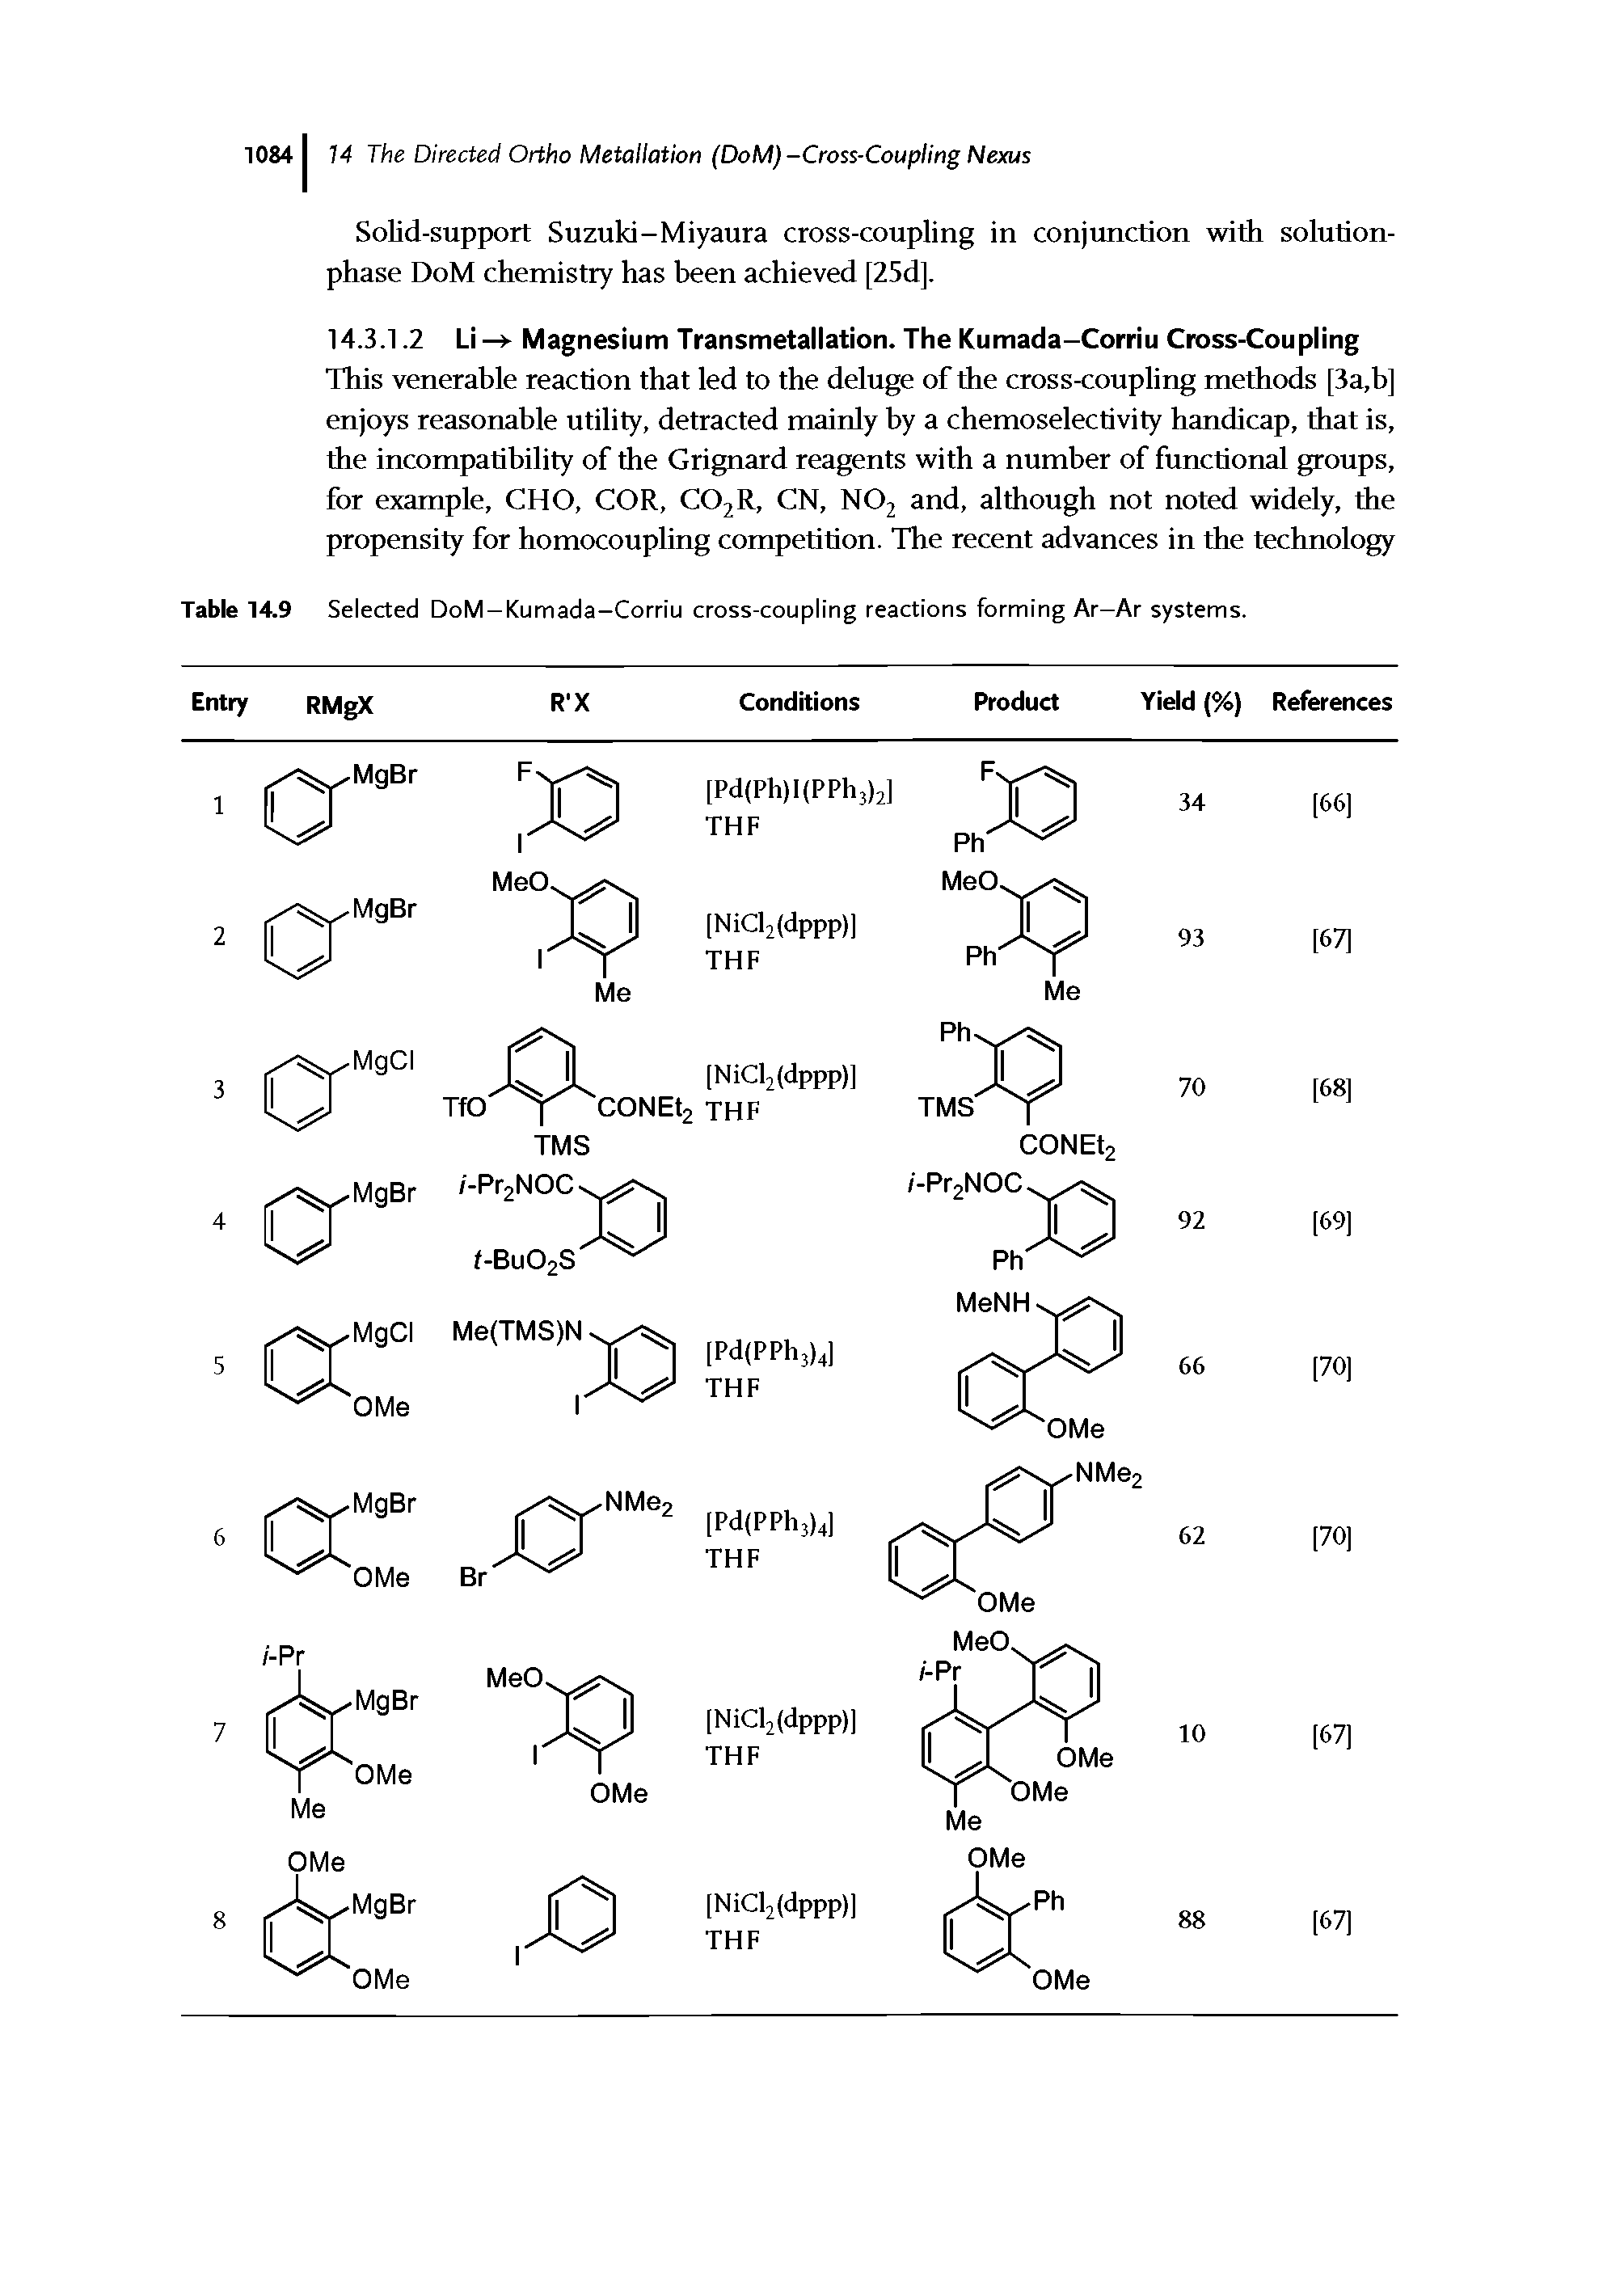 Table 14,9 Selected DoM-Kumada-Corriu cross-coupling reactions forming Ar-Ar systems.